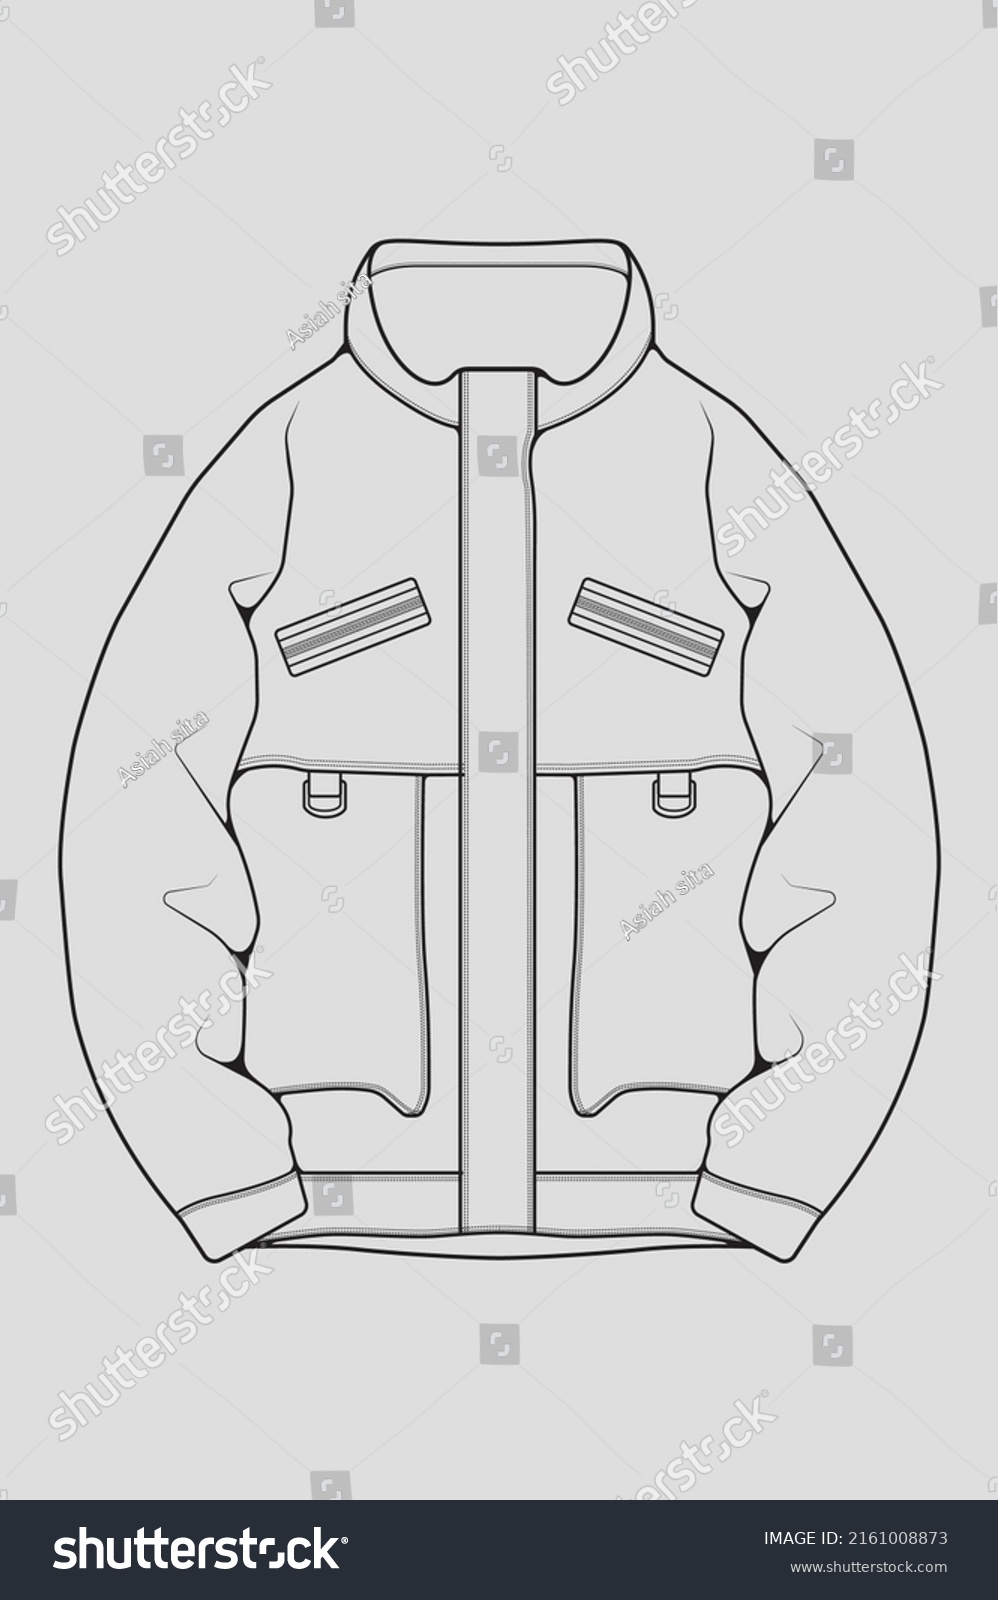 Windbreaker Jacket Technical Fashion Illustration Sketch Stock Vector ...